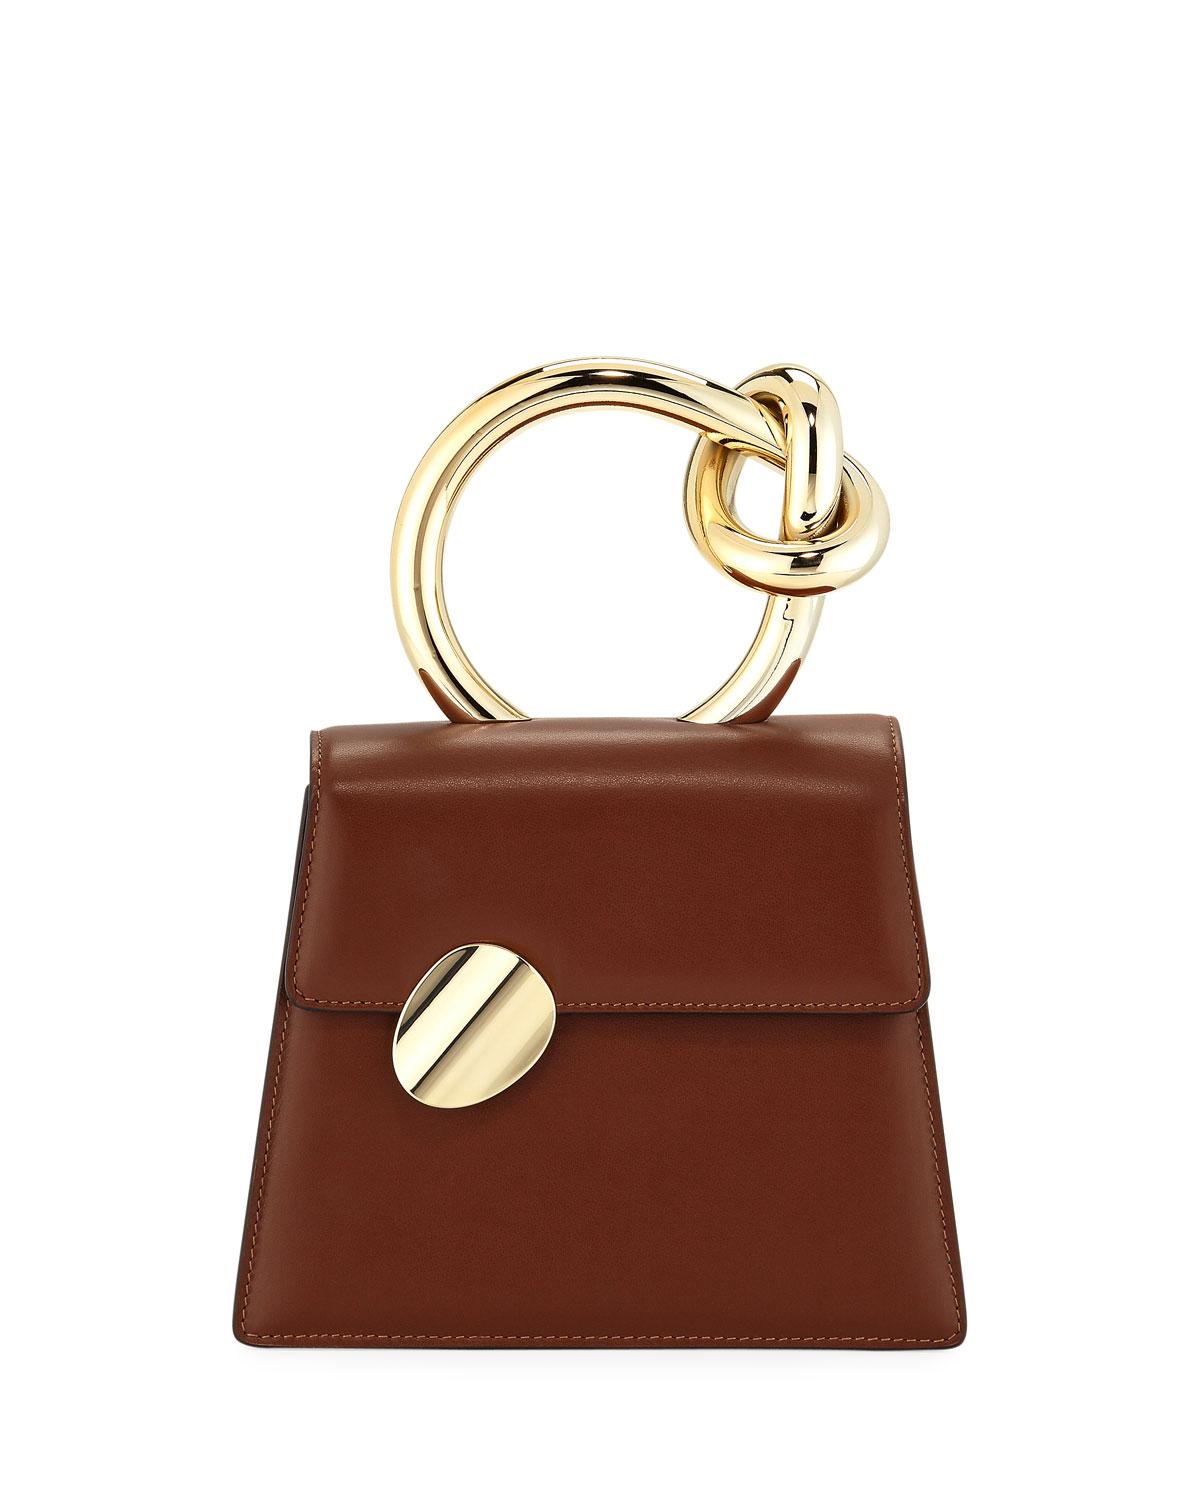 Benedetta Bruzziches Leather Brigitta Small Flap Top Handle Bag in ...